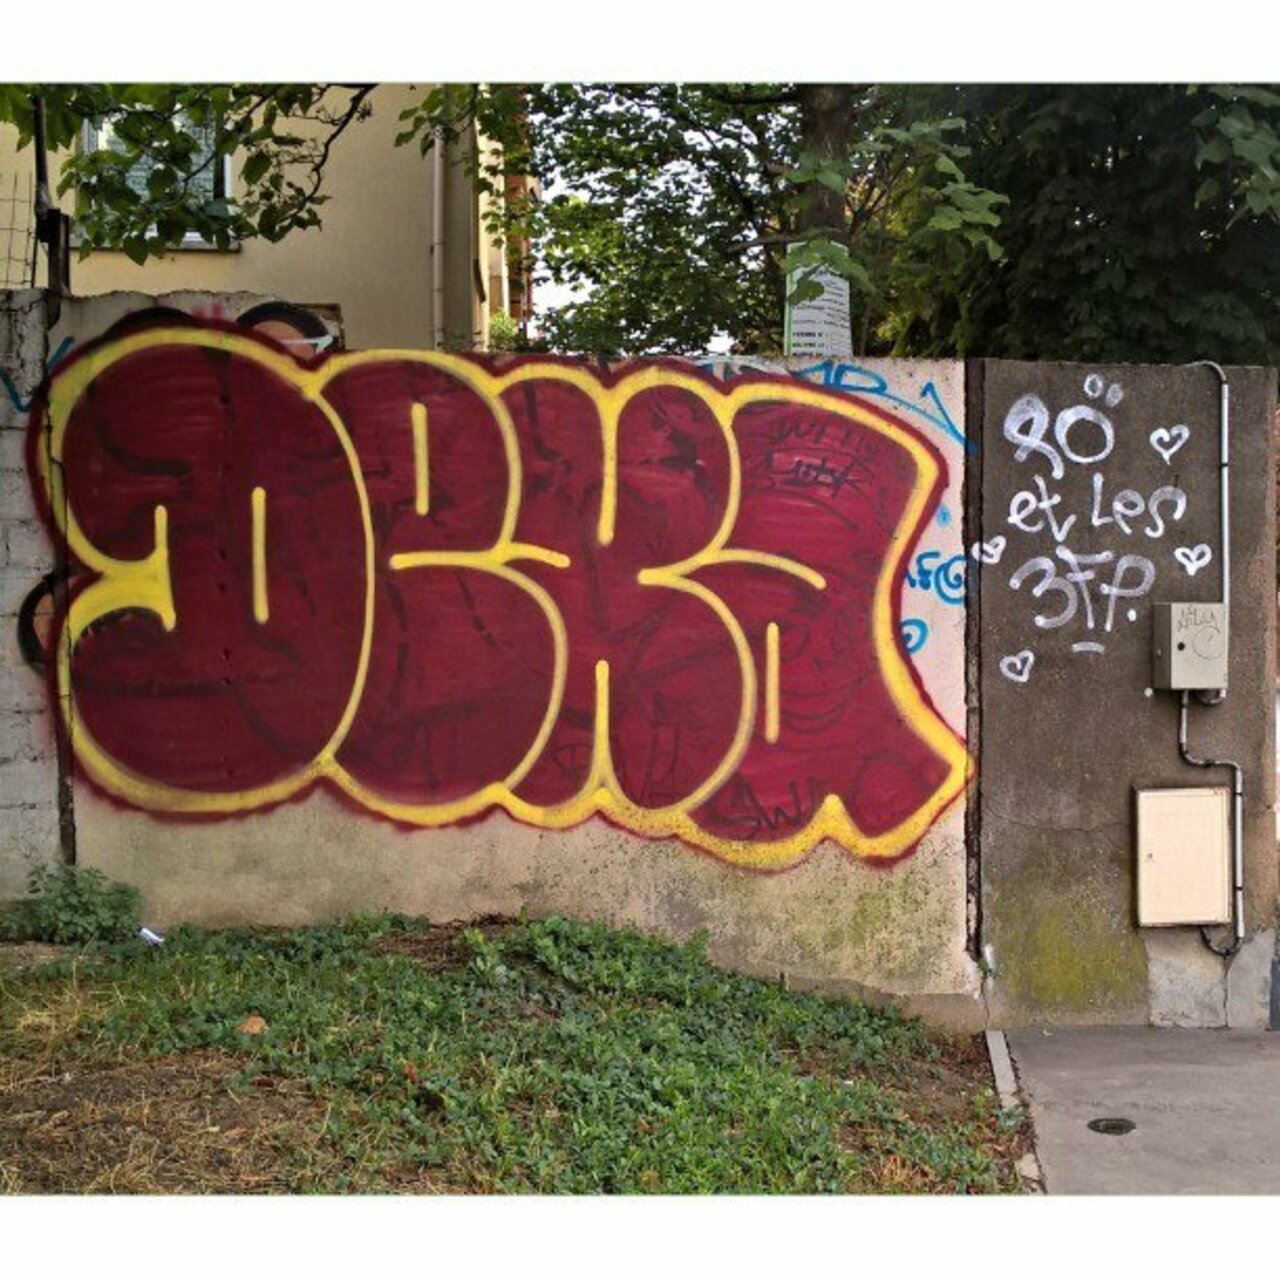 DEXA
#KOcrew #streetart #graffiti #graff #art #fatcap #bombing #sprayart #spraycanart #wallart #handstyle #letterin… https://t.co/cxPENgjKc9